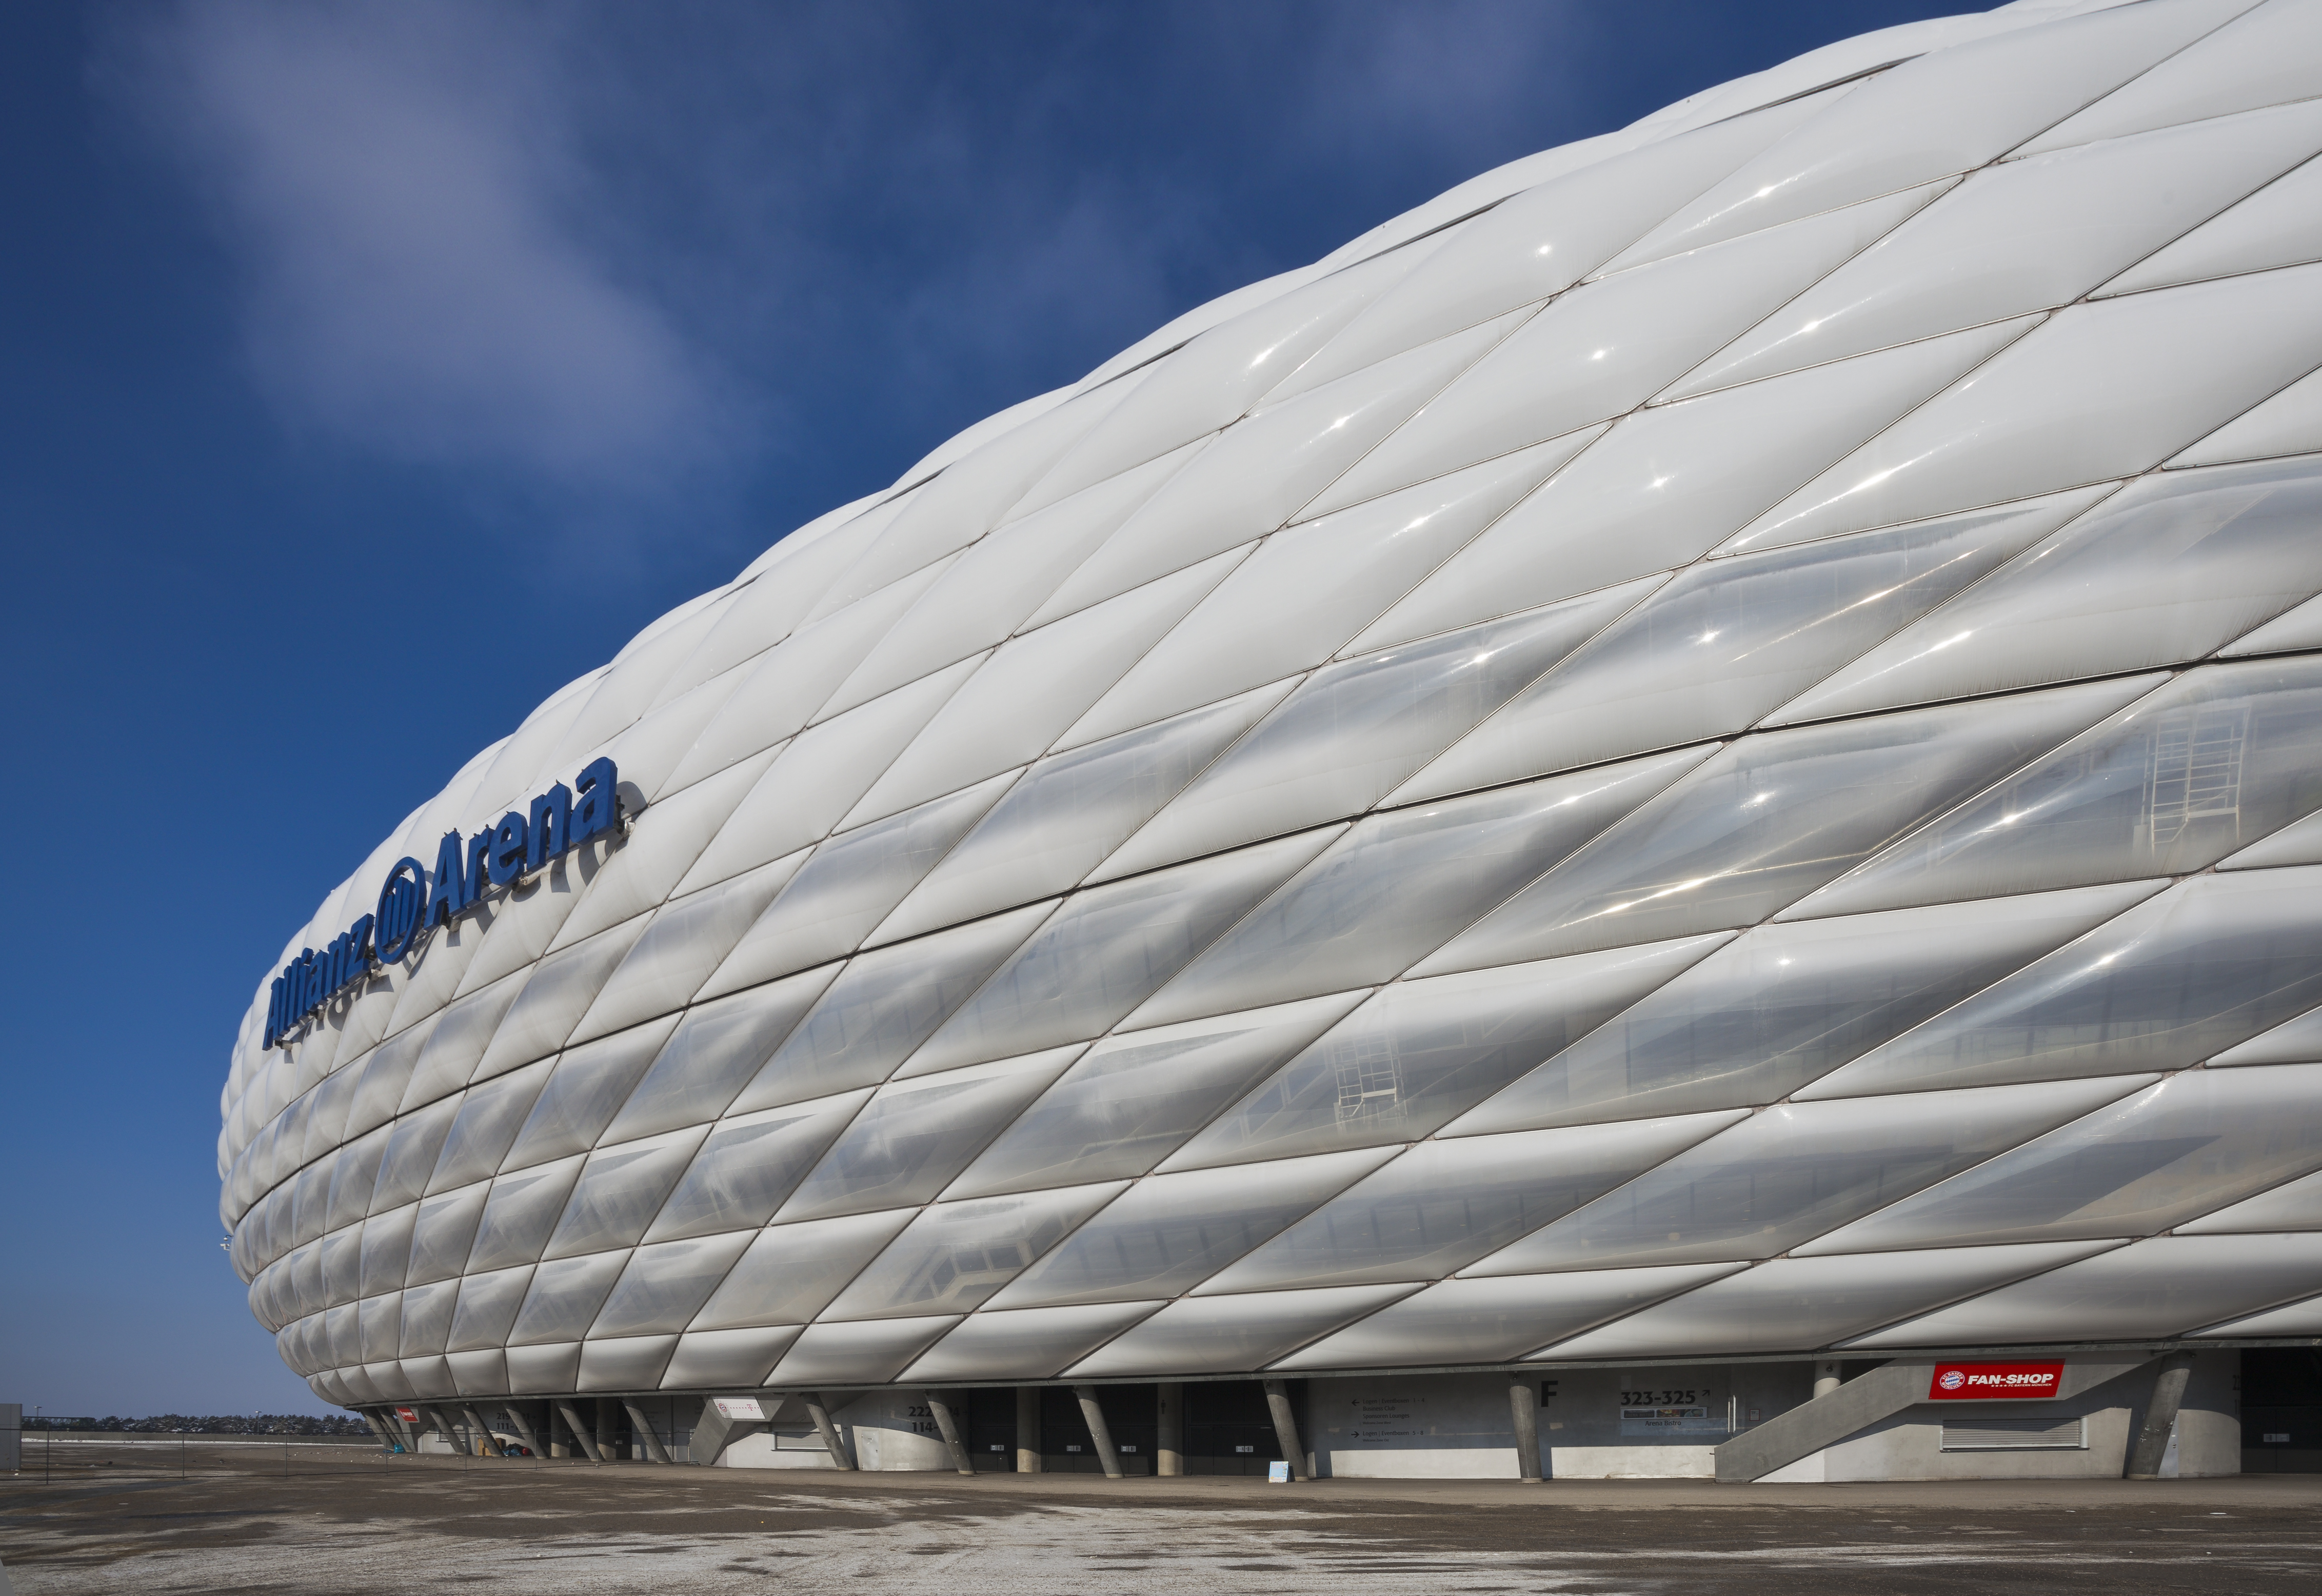 Allianz Arena, Múnich, Alemania, 2013-02-11, DD 02